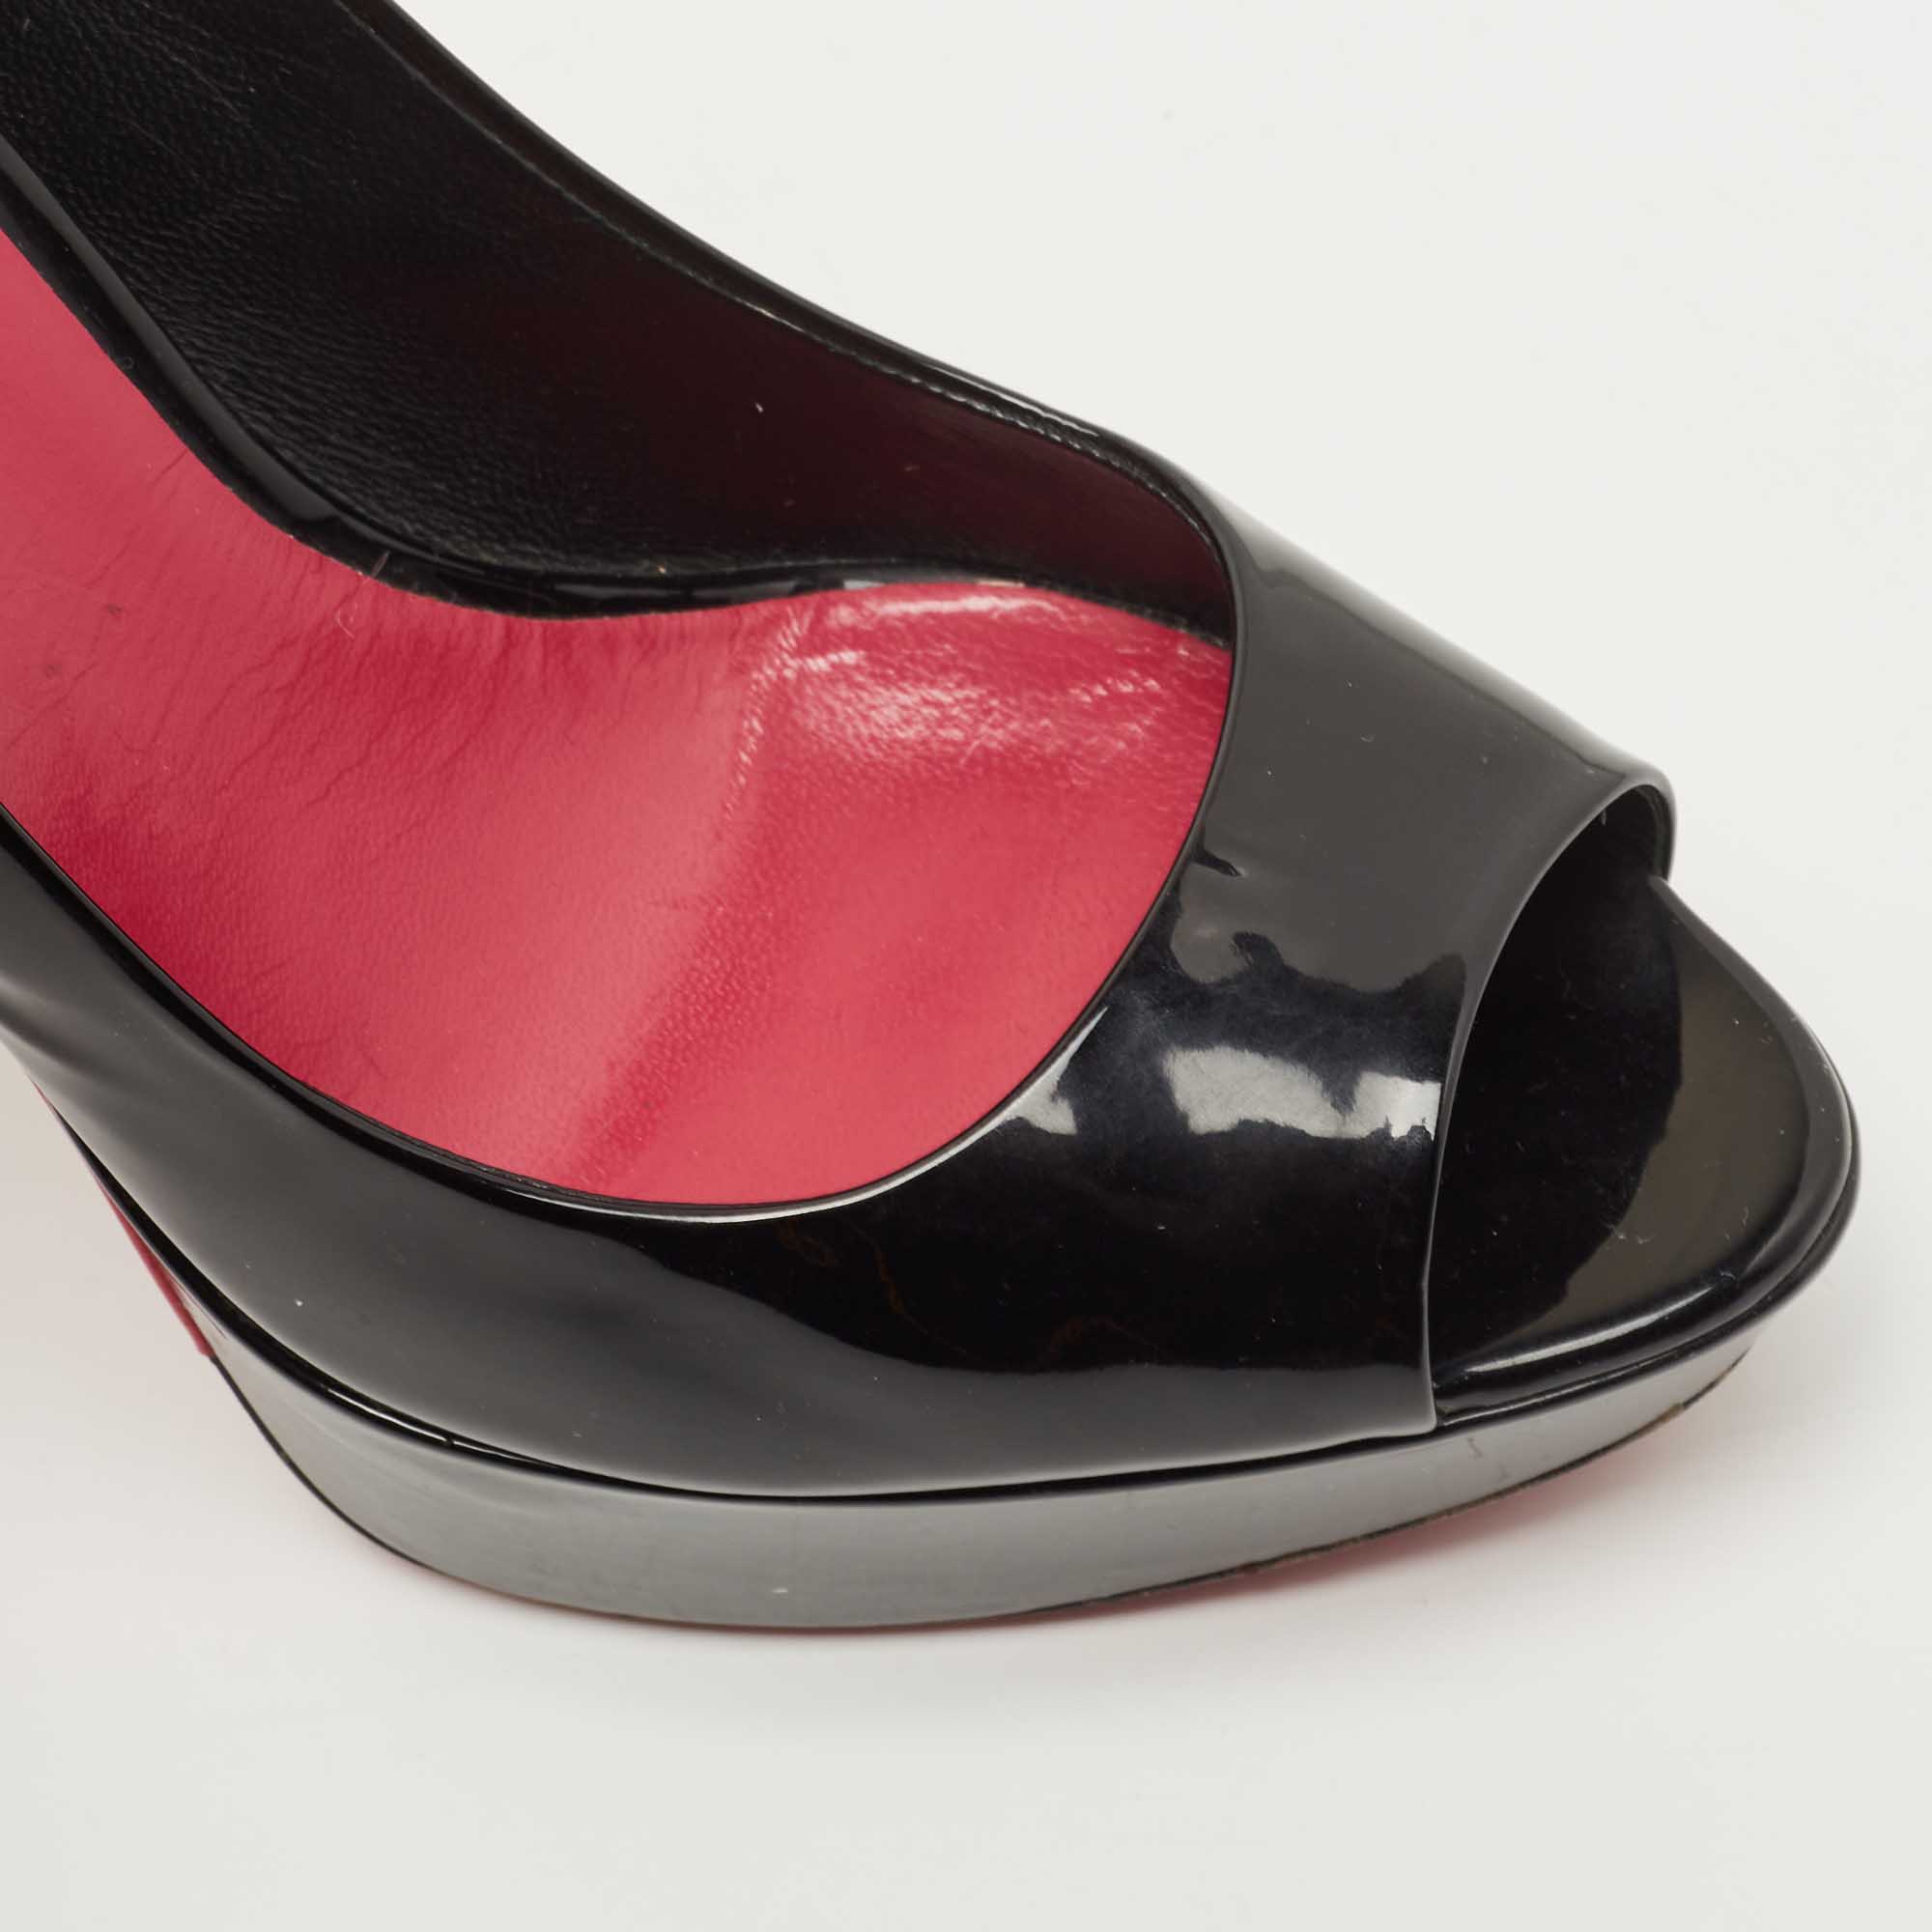 Miu Miu Black Patent Leather Peep Toe Pumps Size 37.5